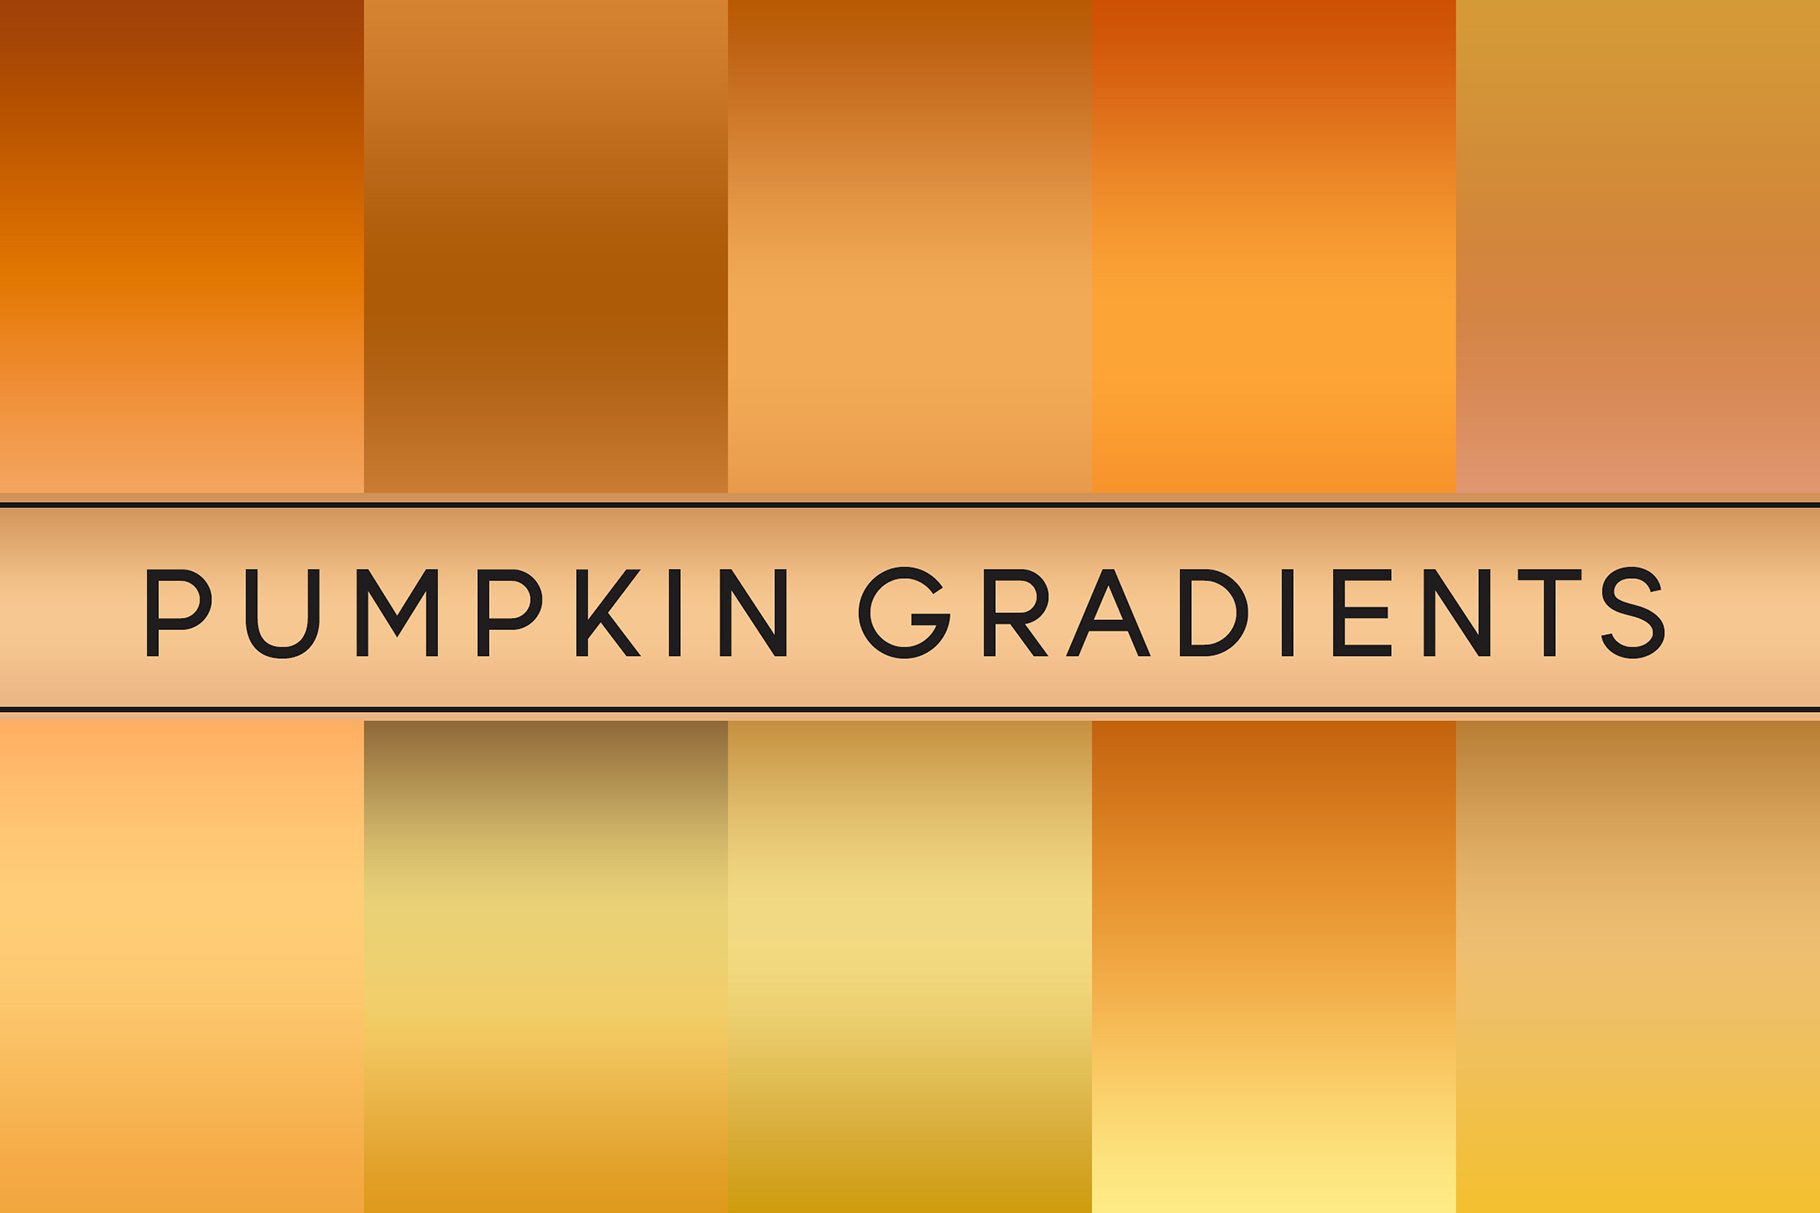 Pumpkin Gradients cover image.